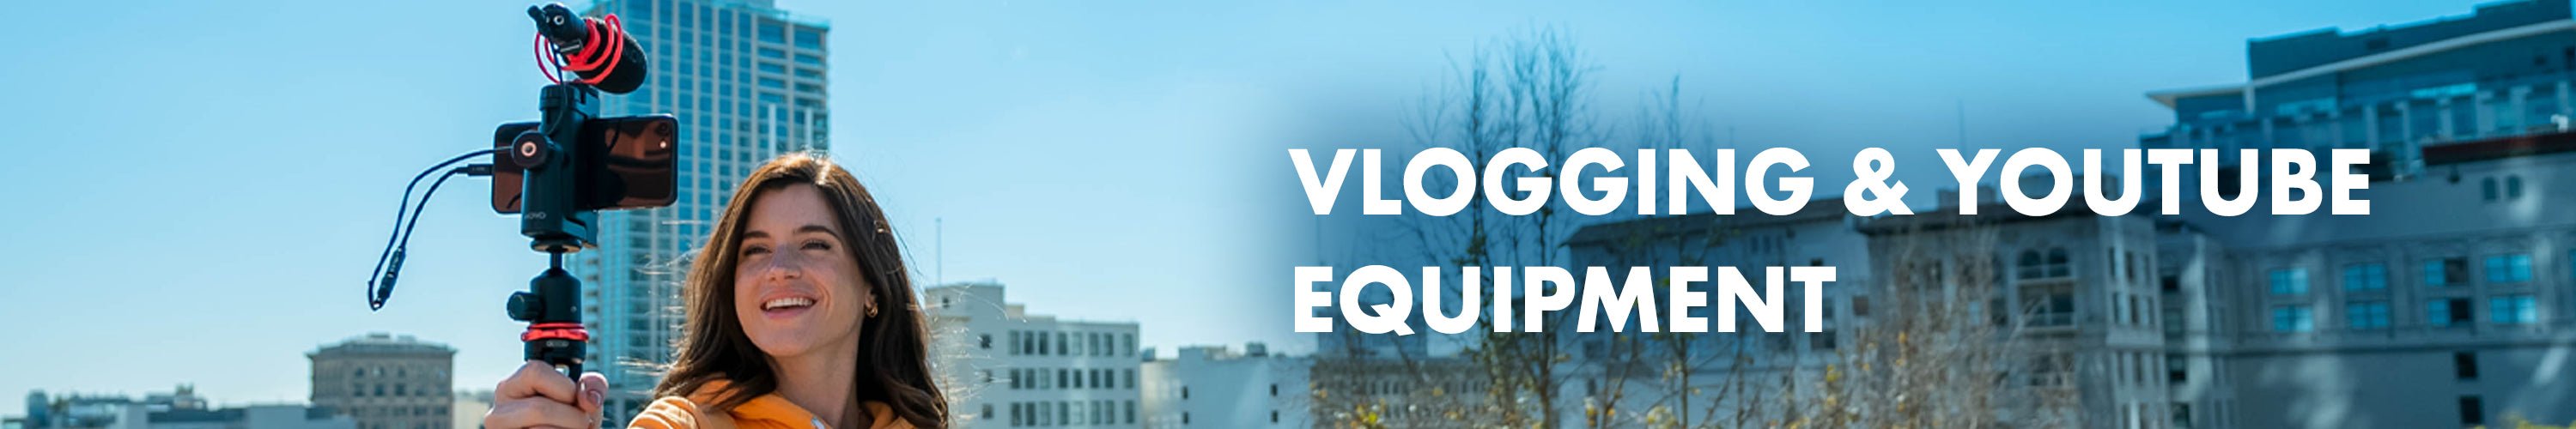 Vlogging Kits, Vlogging Equipment & Vlog Video Equipment - Movo